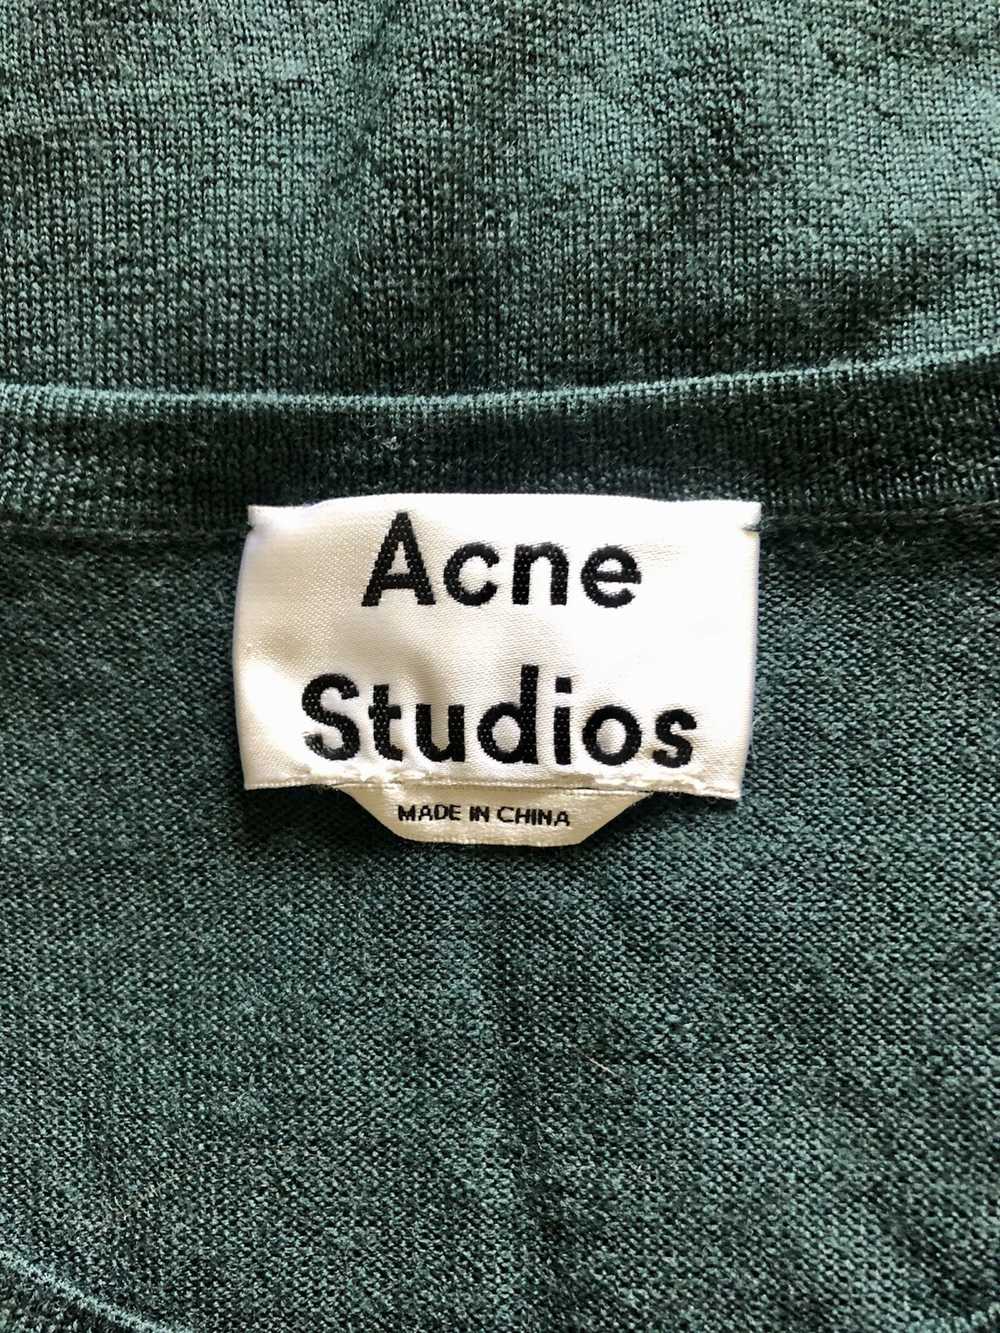 Acne Studios Acne Studios lightweight knit - image 3